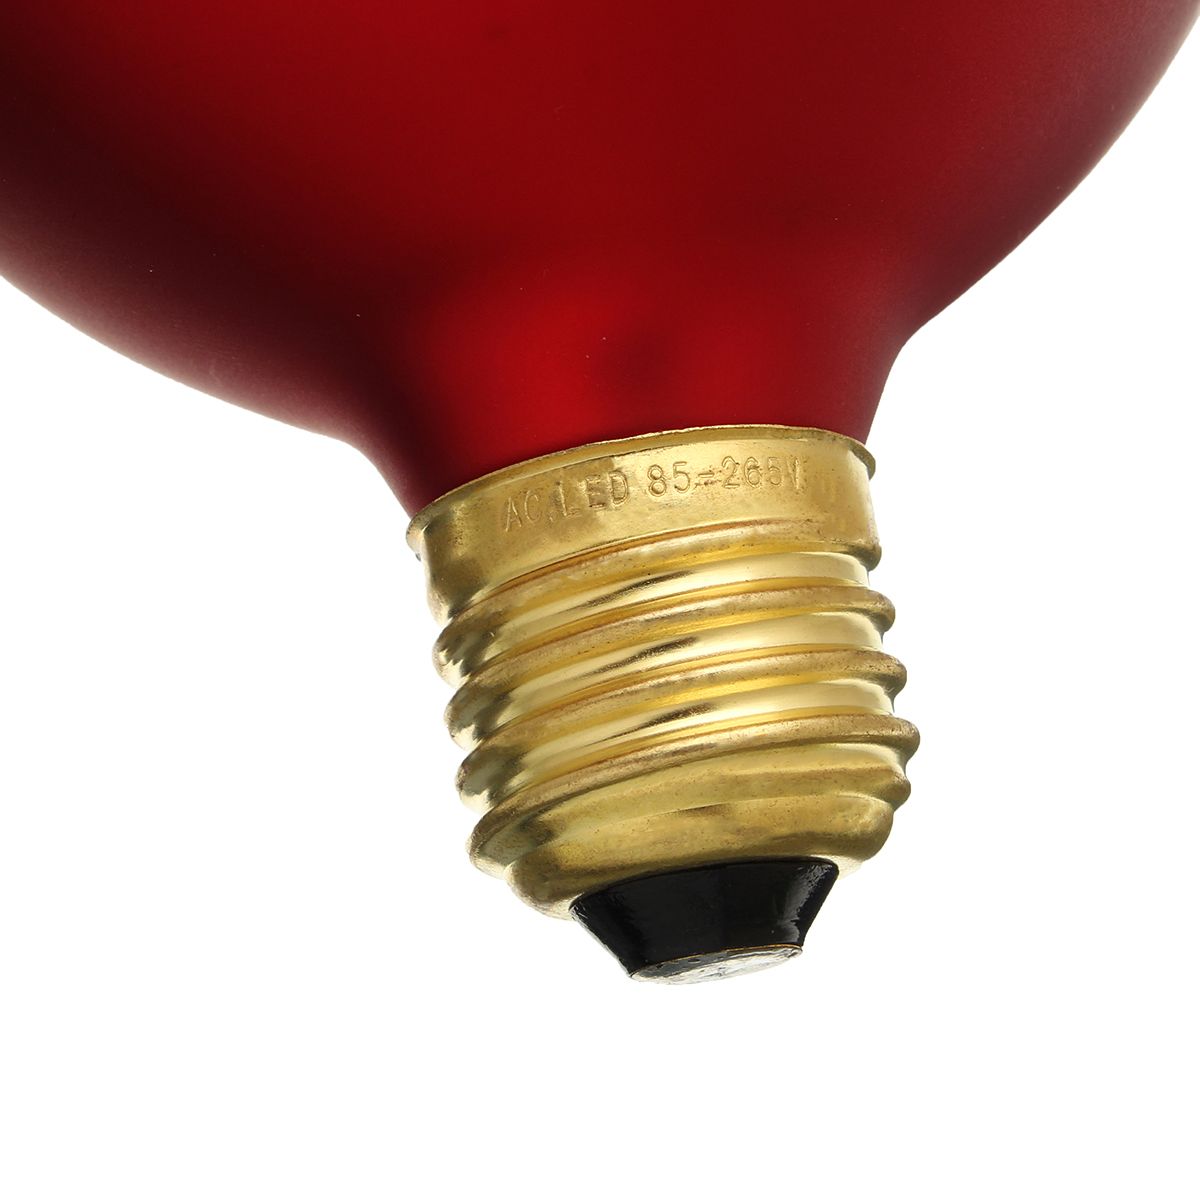 Kingso-E27-G95-LED-Light-Bulb-Christmas-Edison-Decorative-Lamp-for-Holiday-Home-Indoor-Use-AC85-265V-1516343